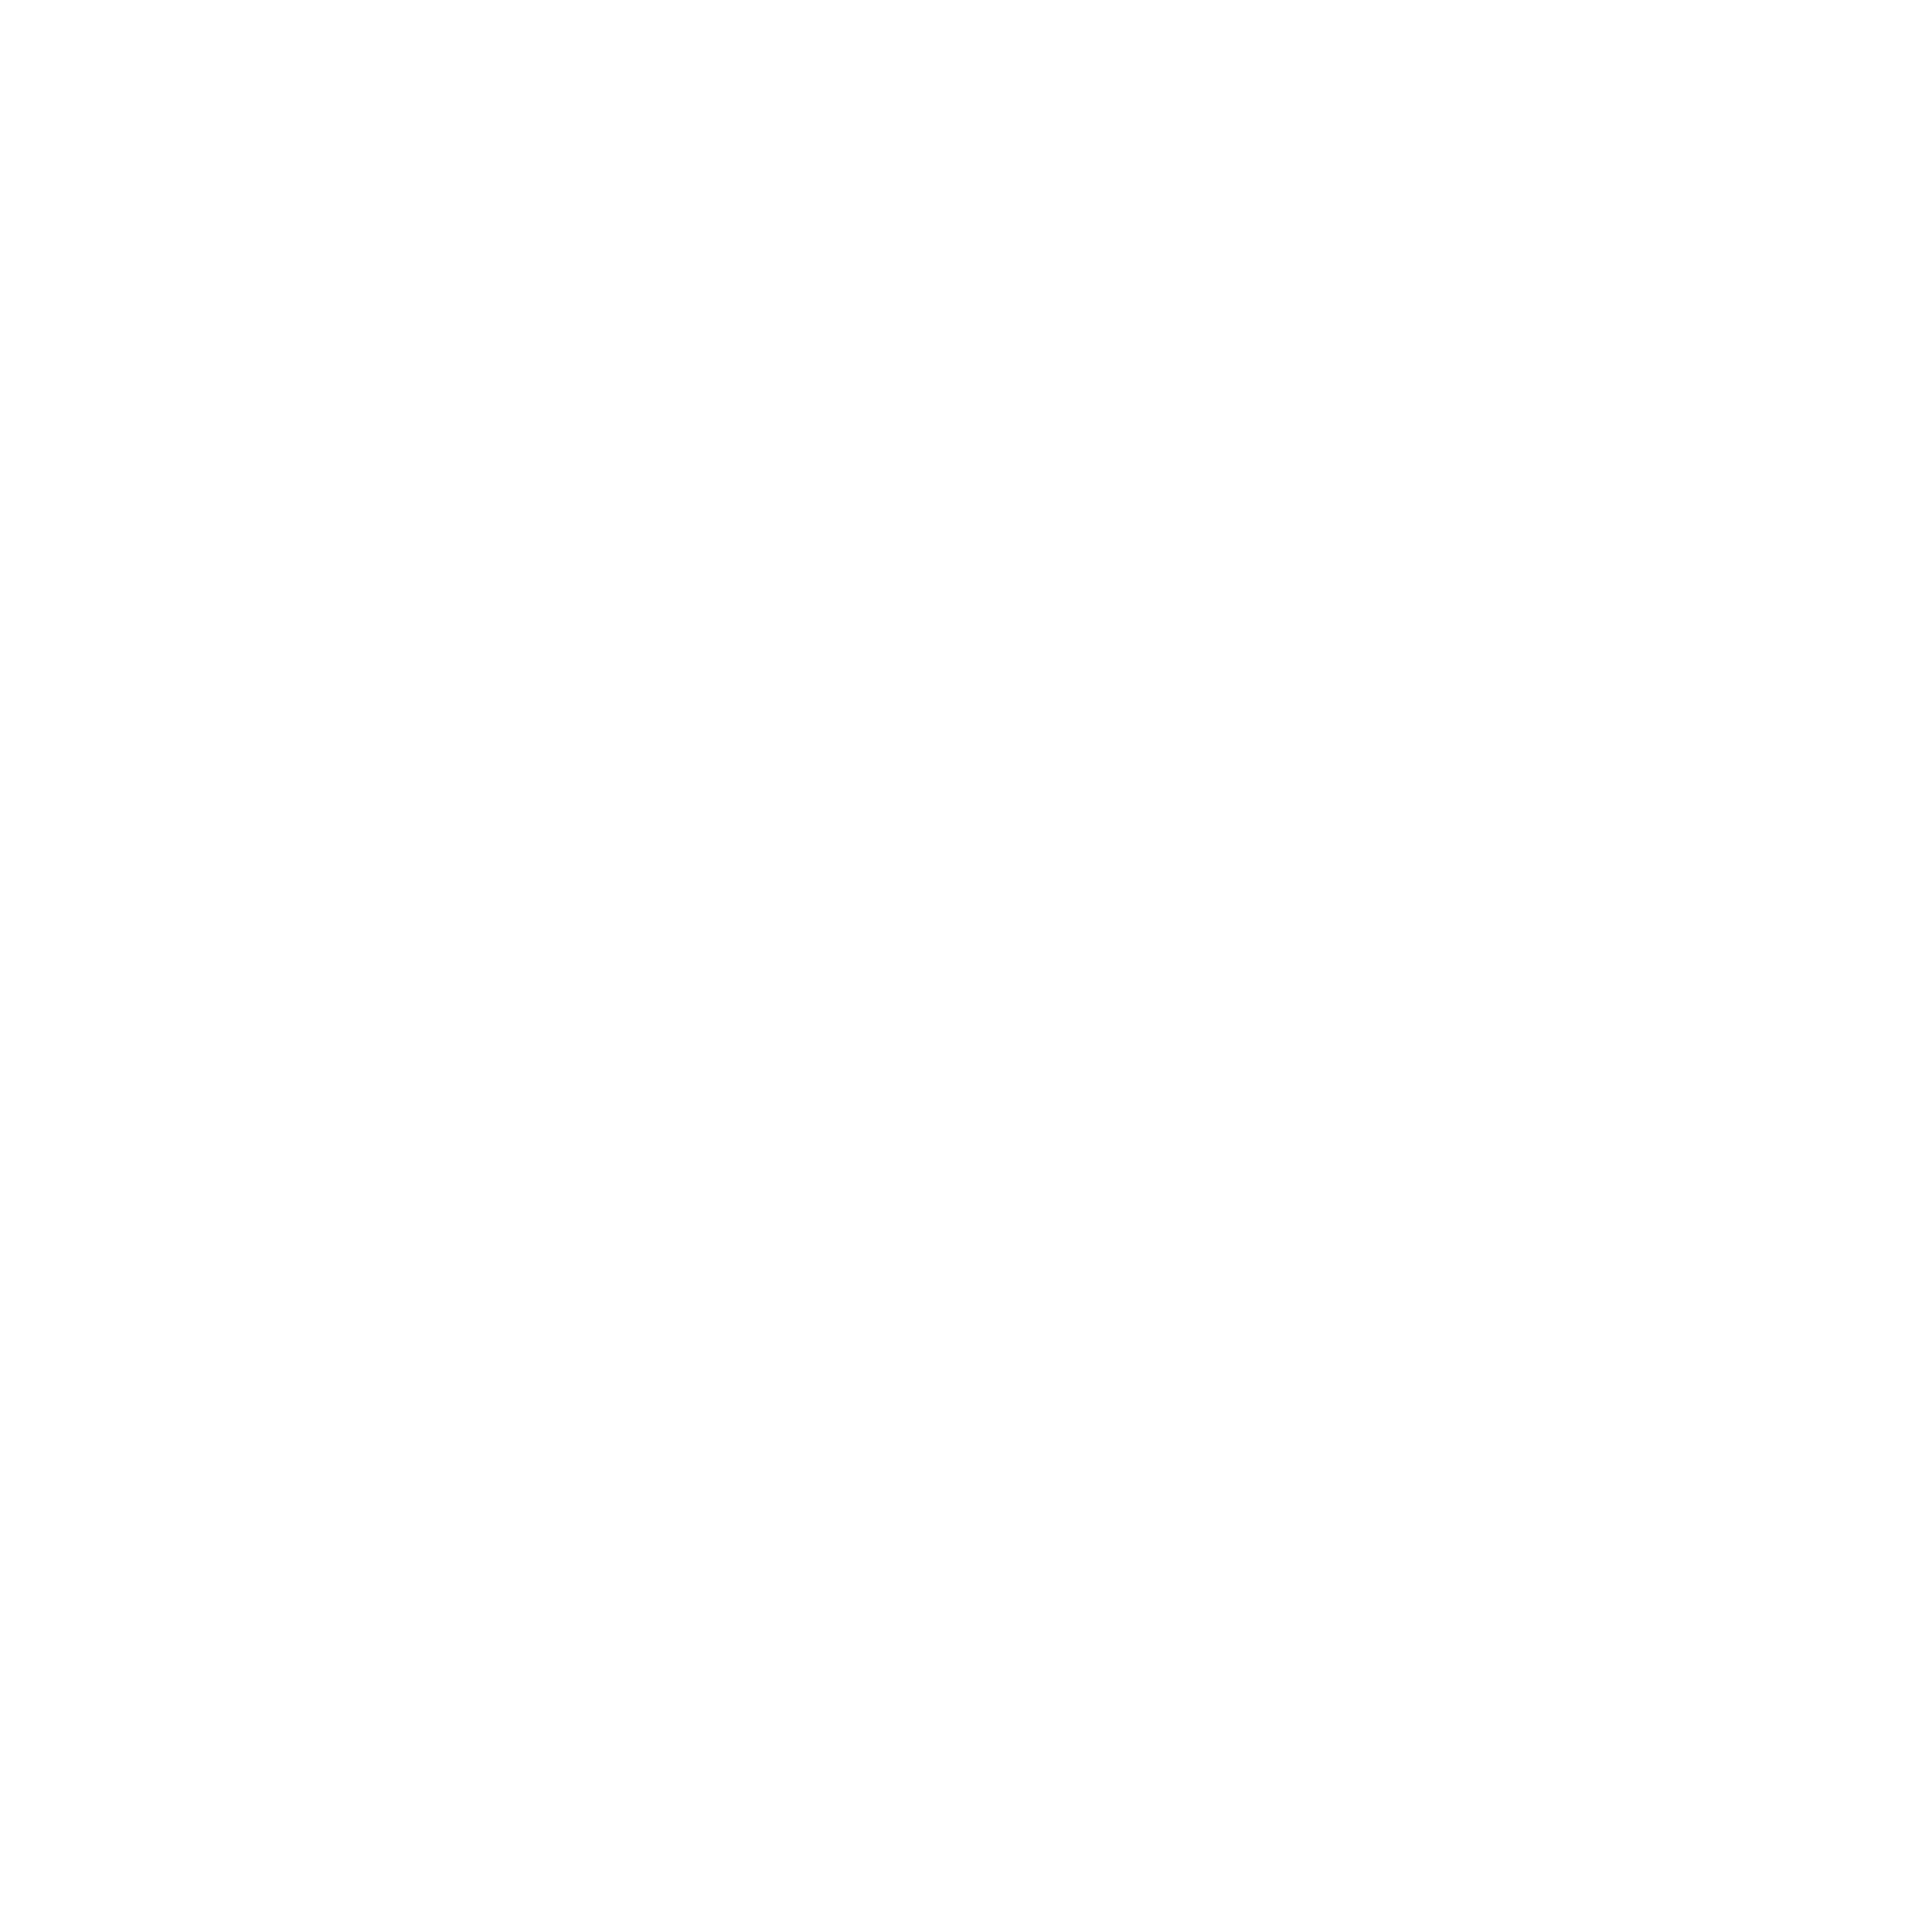 Phone White Icon #294017 - Free Icons Library